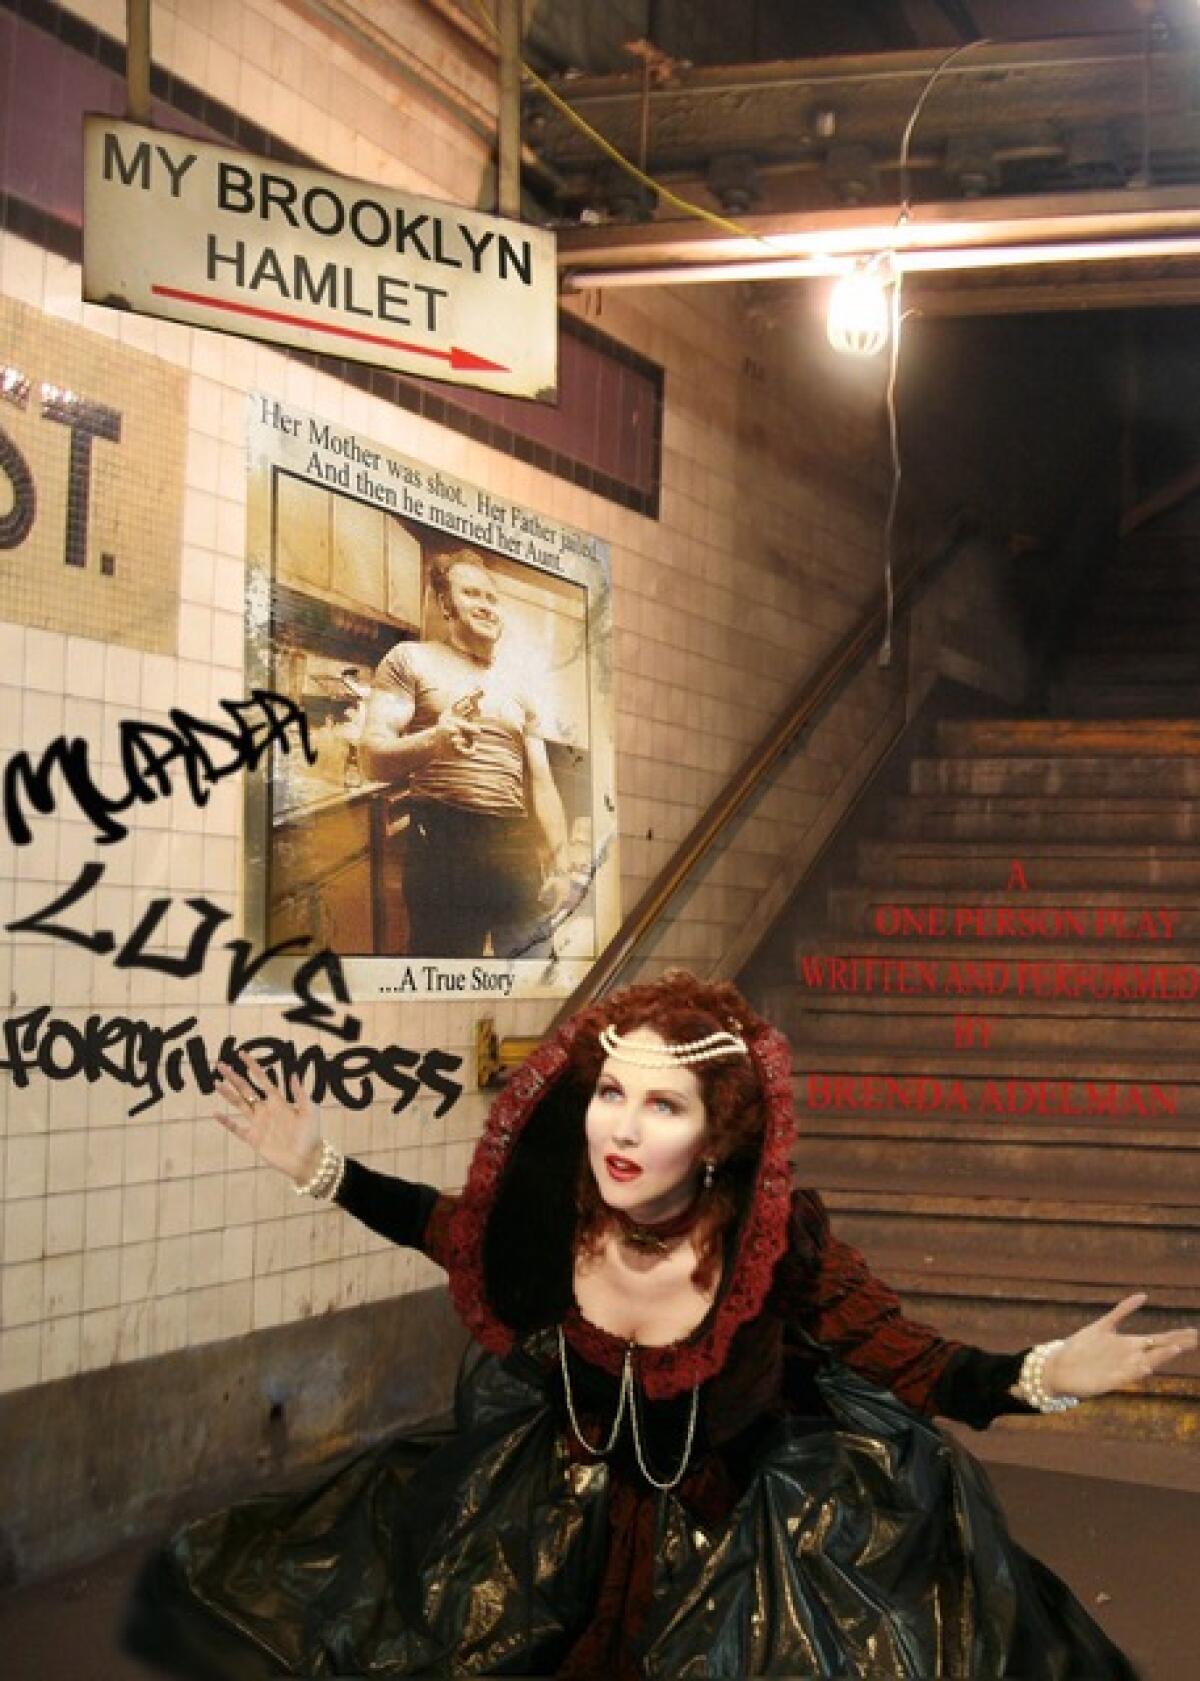 Brenda Adelman in "My Brooklyn Hamlet"